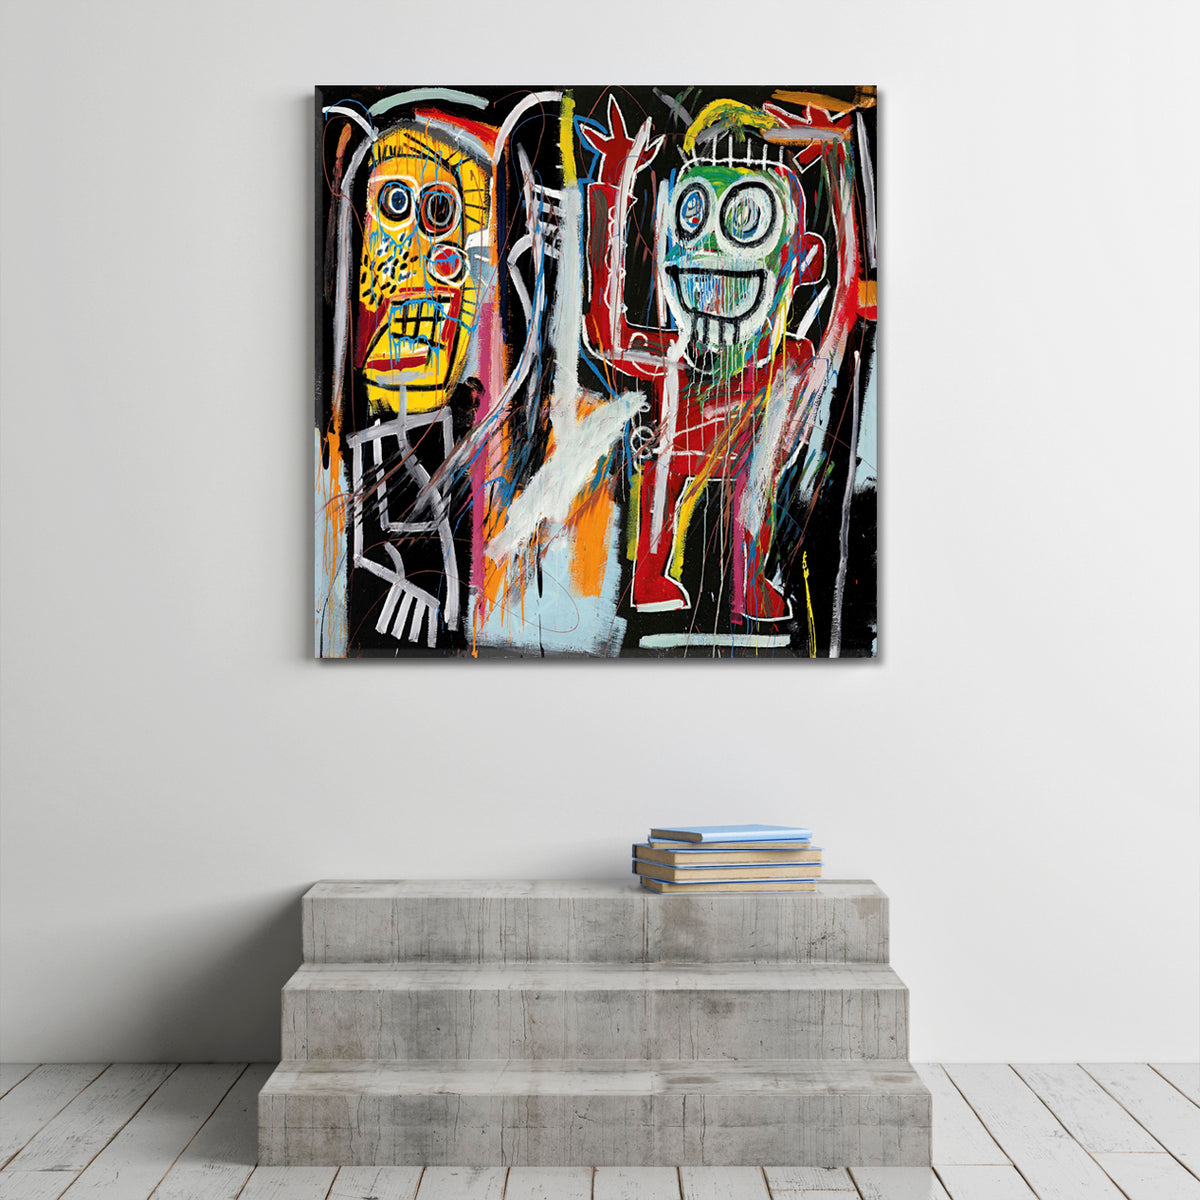 CHAOTIC ENEGY  Jean Basquiat Scull UNTITLED HEAD  Graffiti - Square Panel Contemporary Art Artesty 1 Panel 12"x12" 